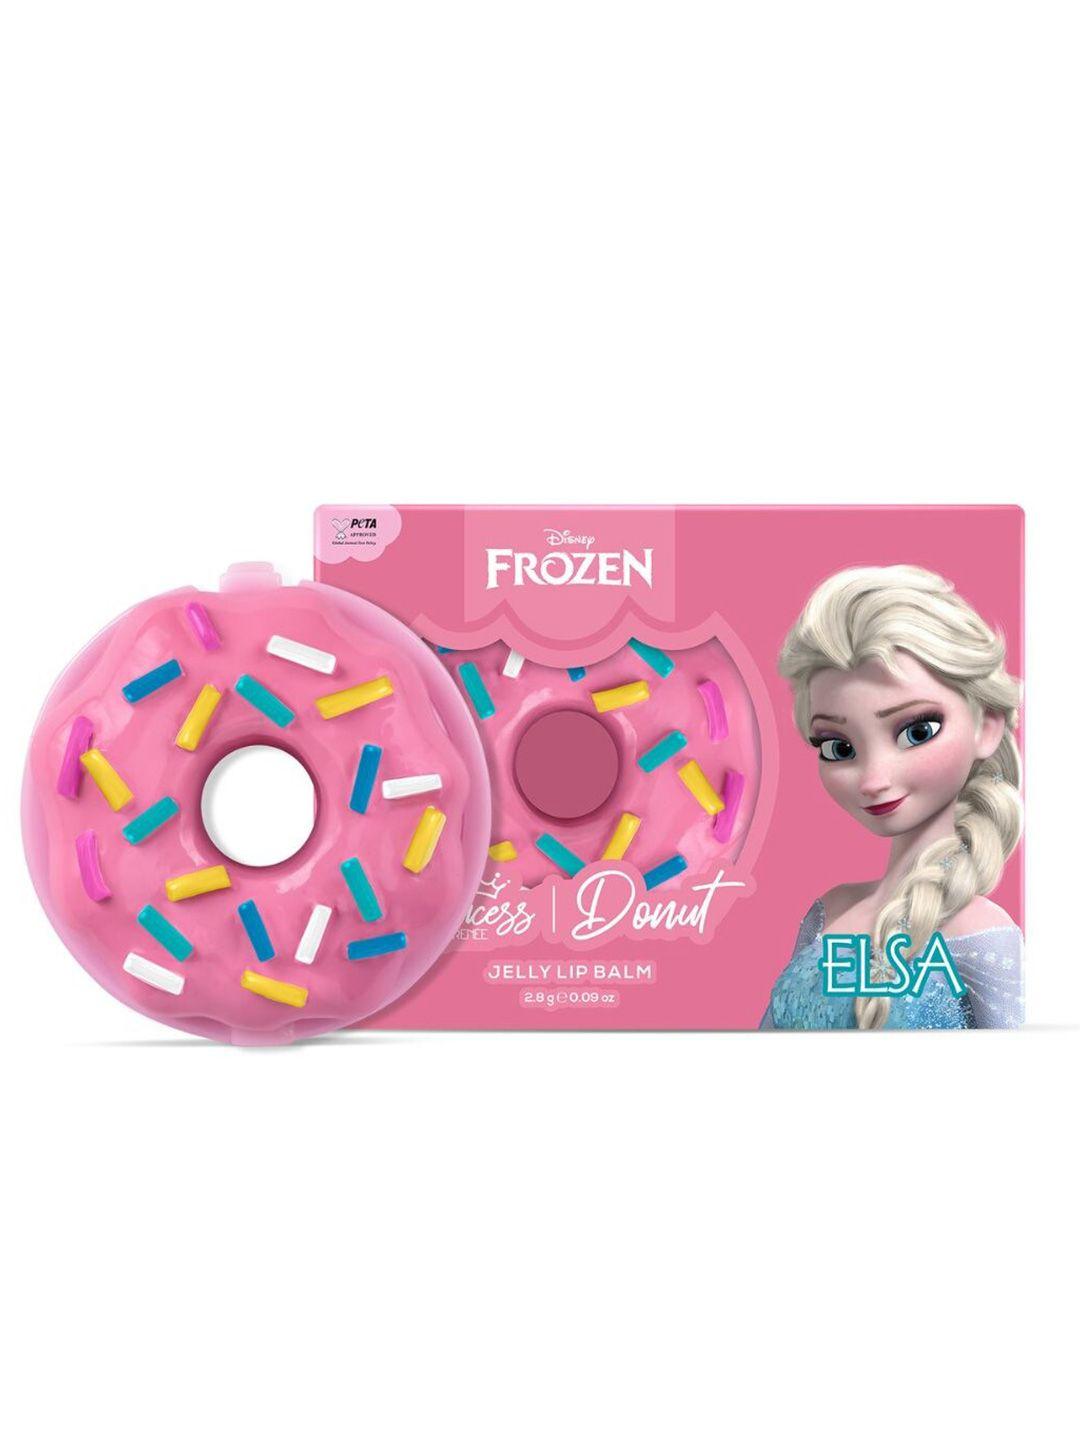 renee princess disney frozen donut jelly lip balm 2.8g - elsa